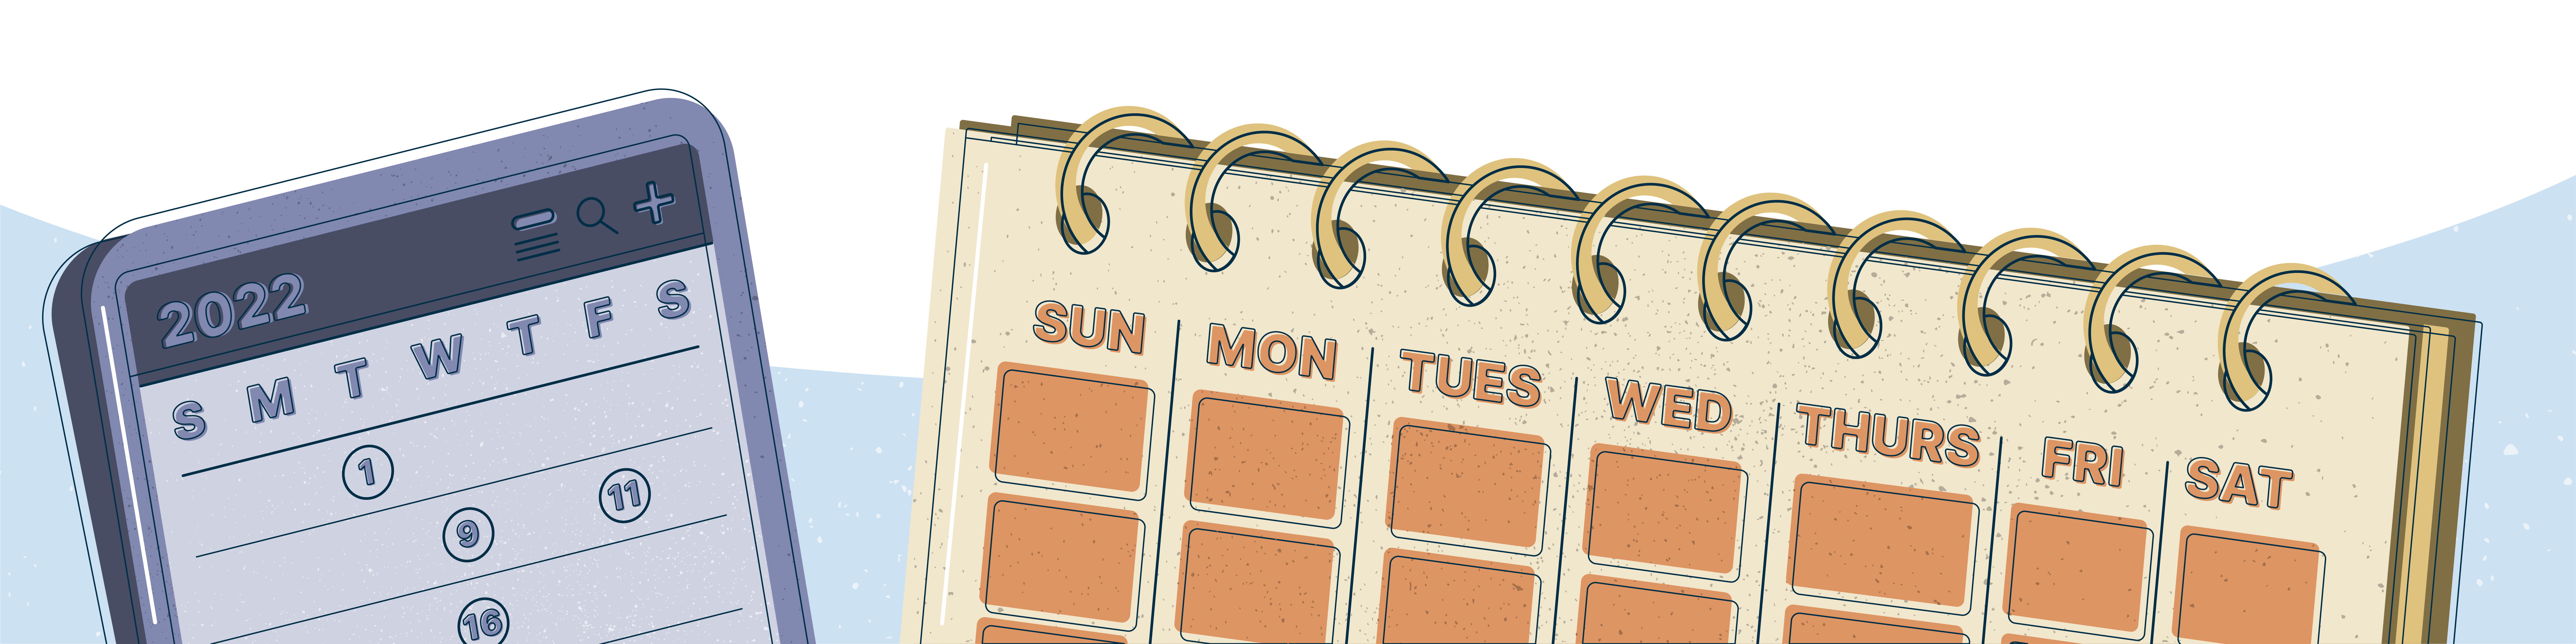 A digital and a paper calendar